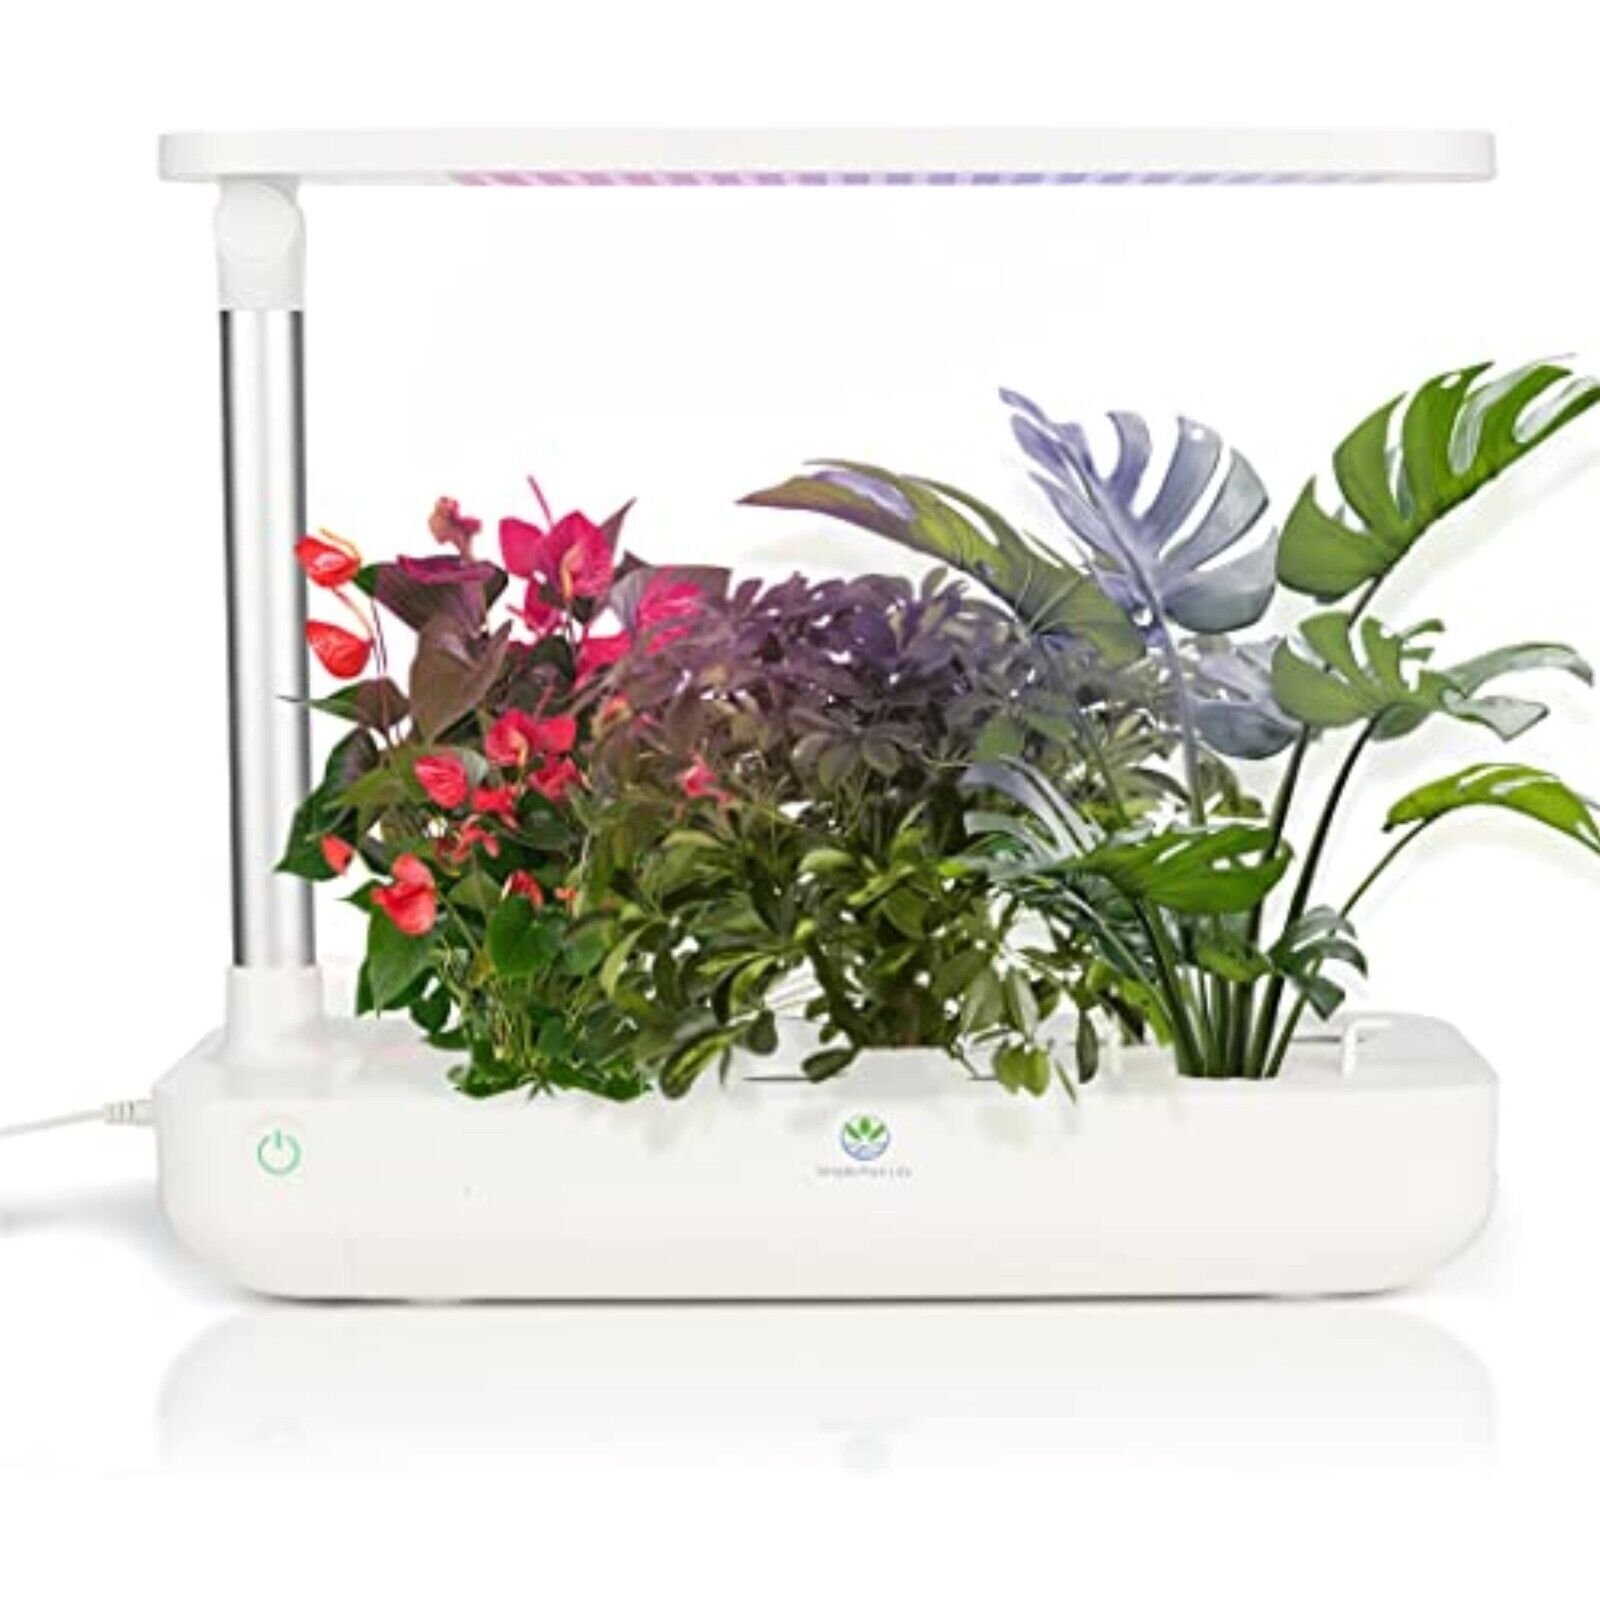 9 Pods Hydroponics Growing System Indoor Herb Garden Grow Light Plants Home